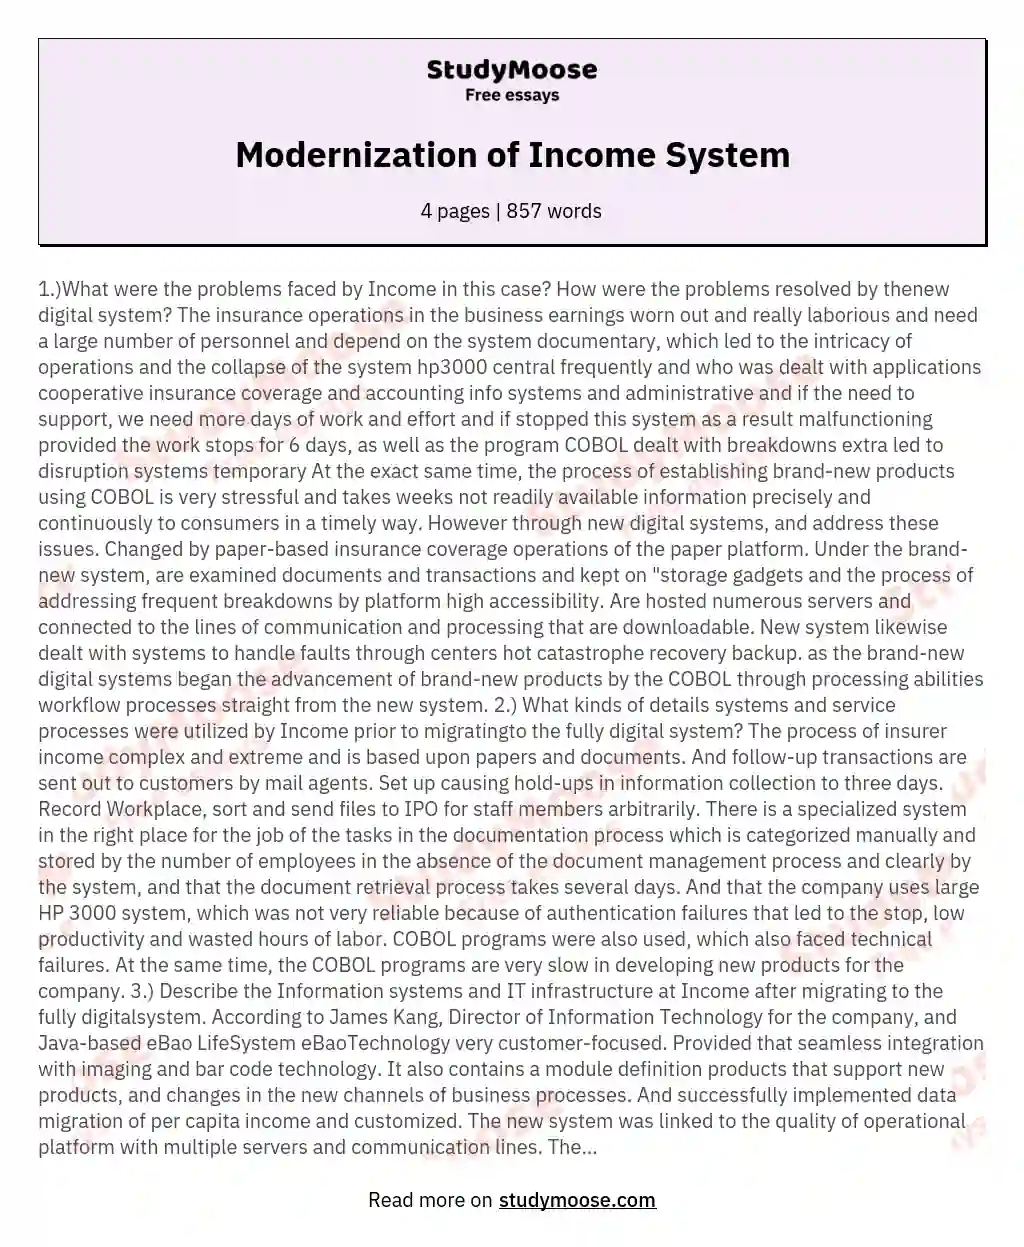 Modernization of Income System essay